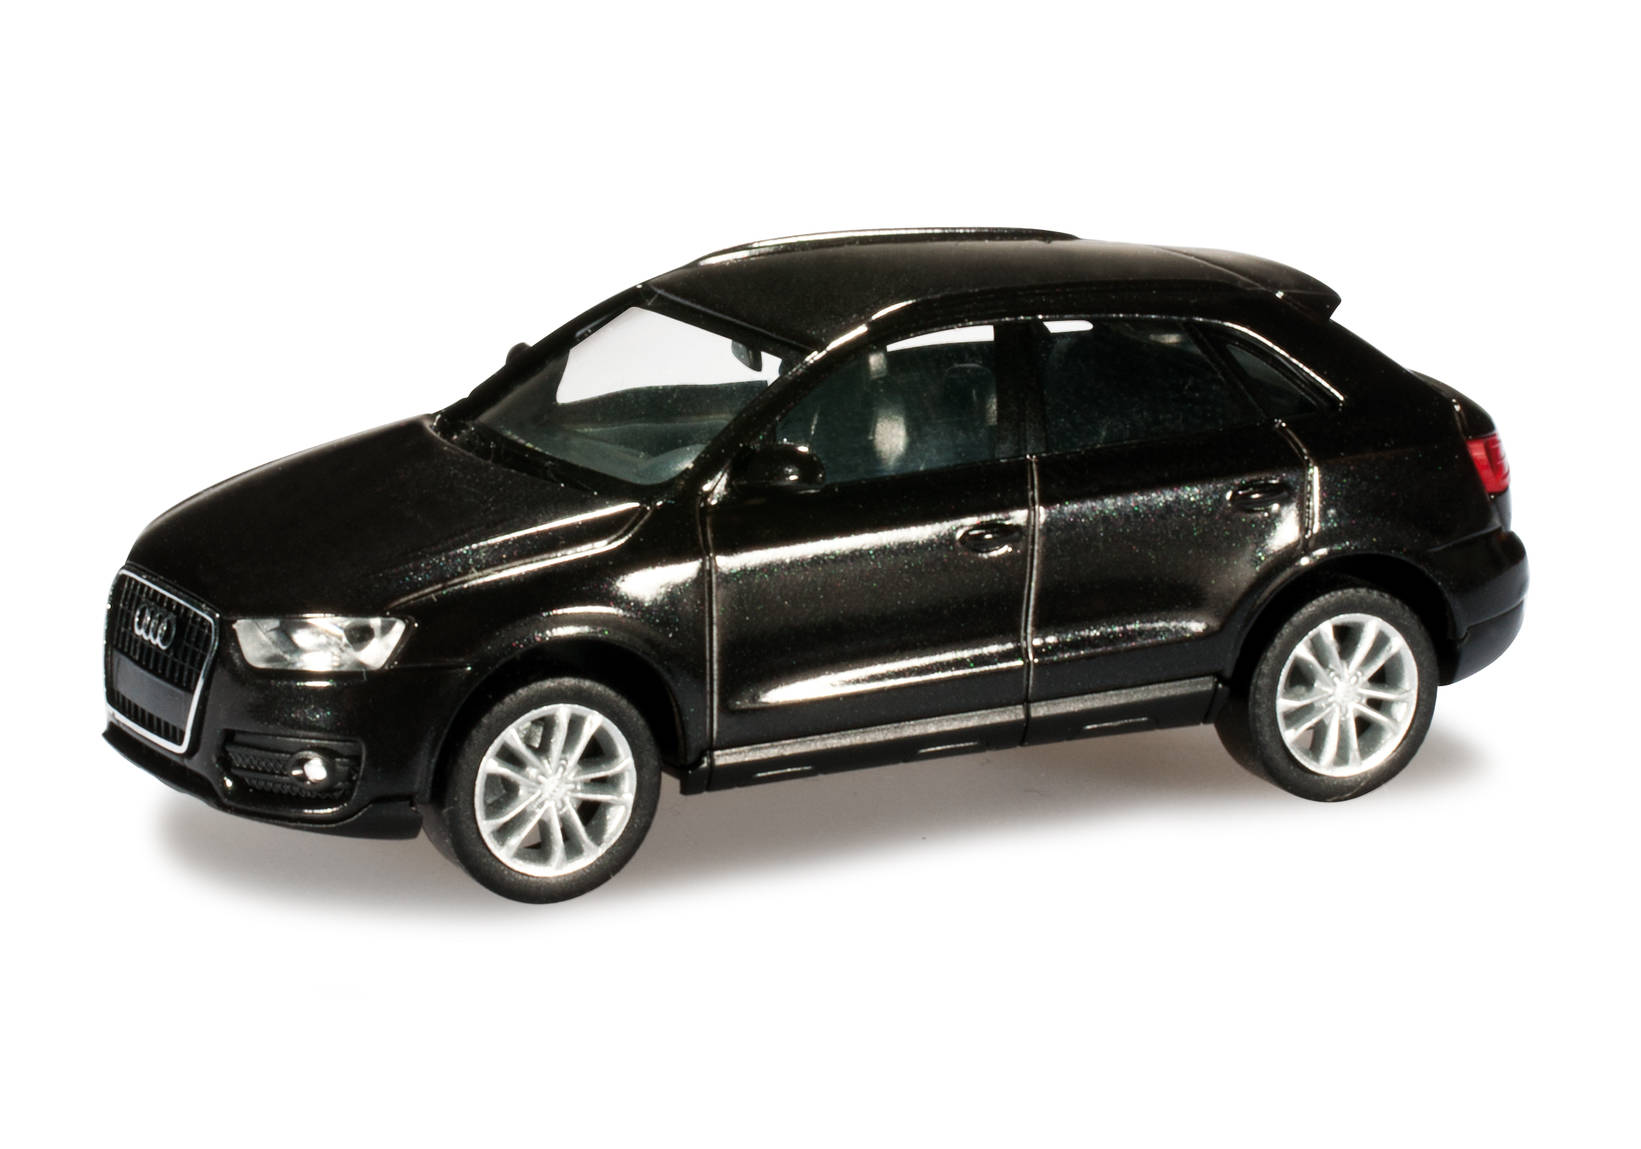 Audi Q3, phantom black metallic